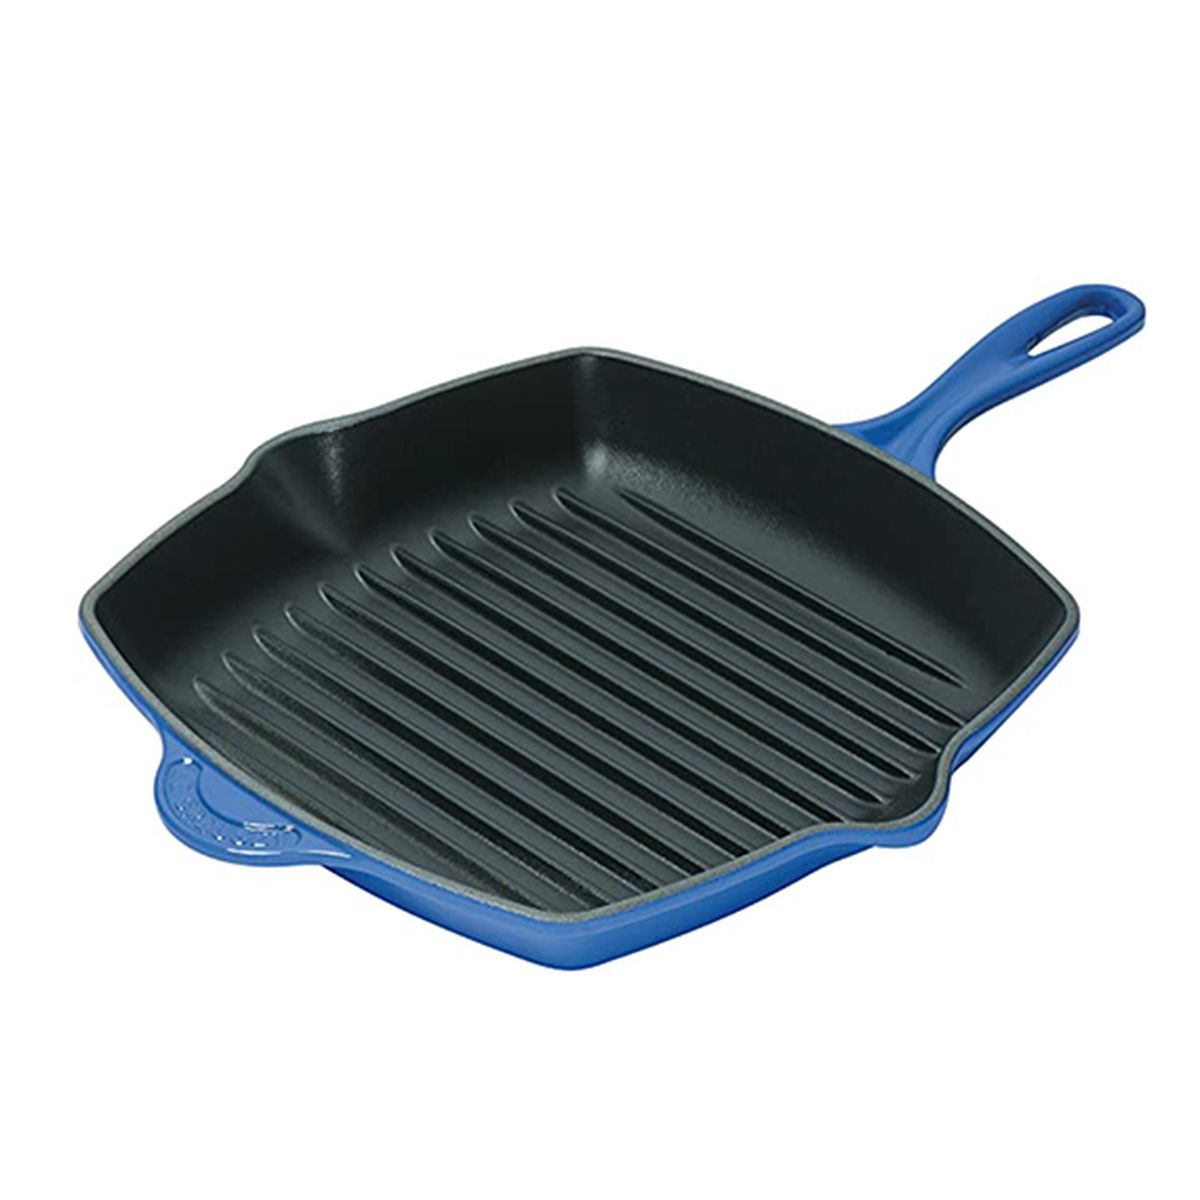 Blue cast-iron pan.